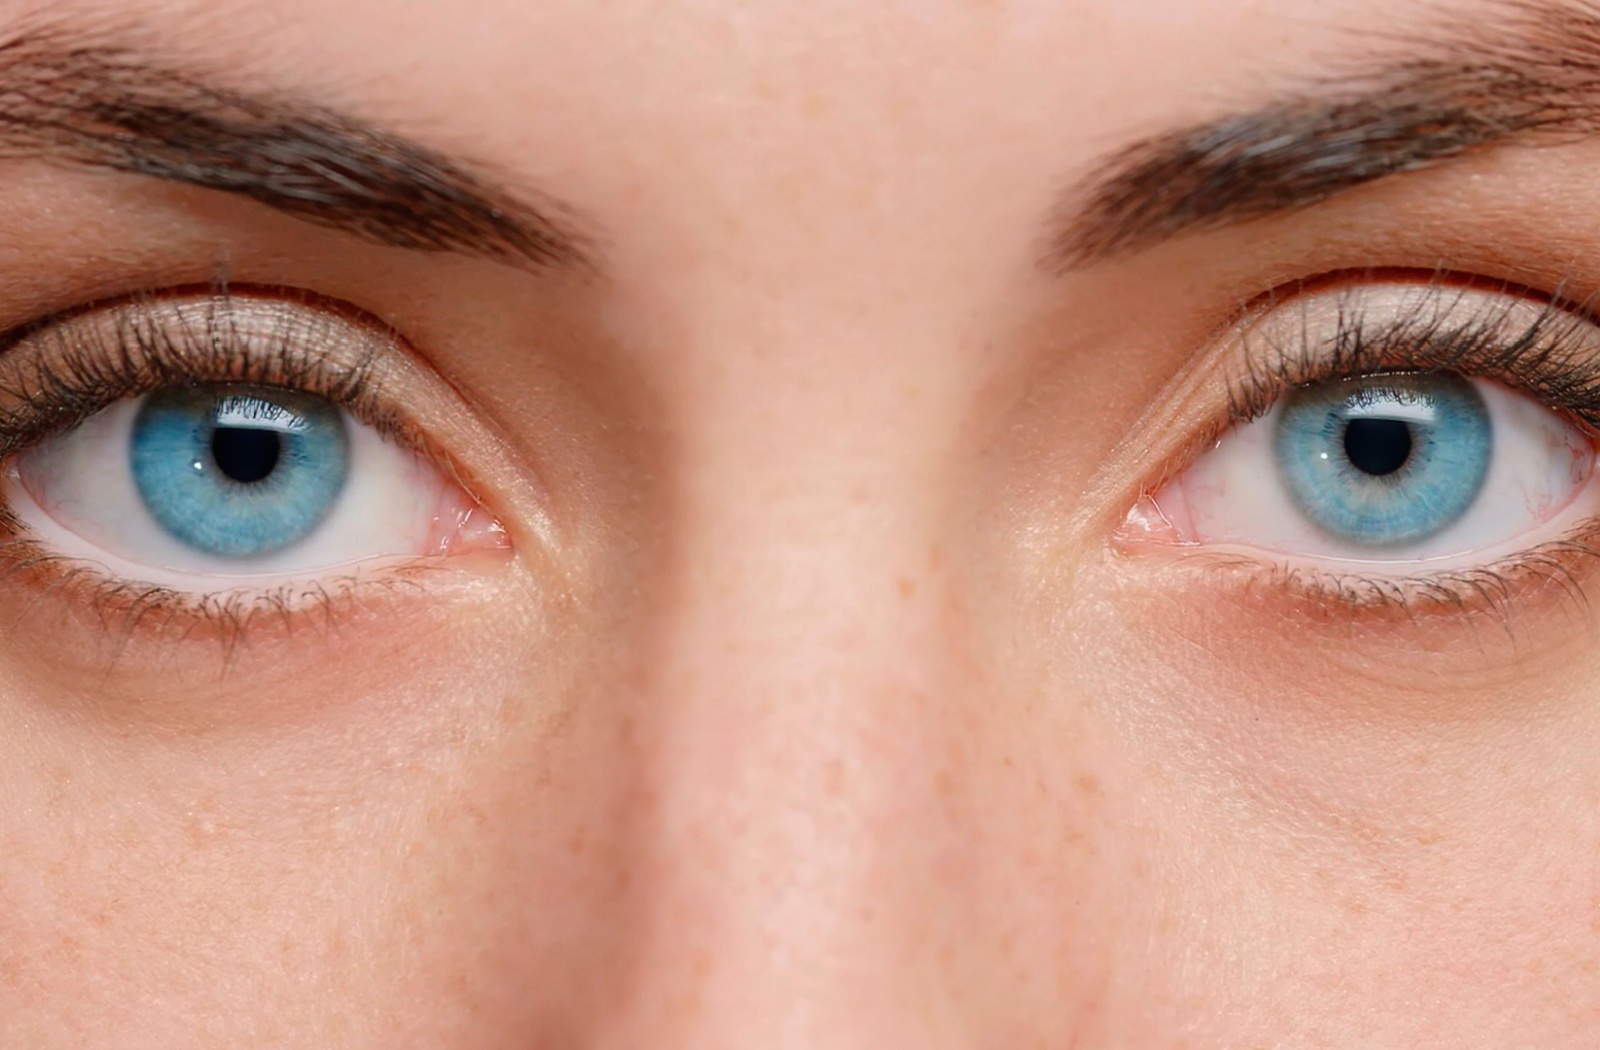 An intense close-up of piercing blue eyes.